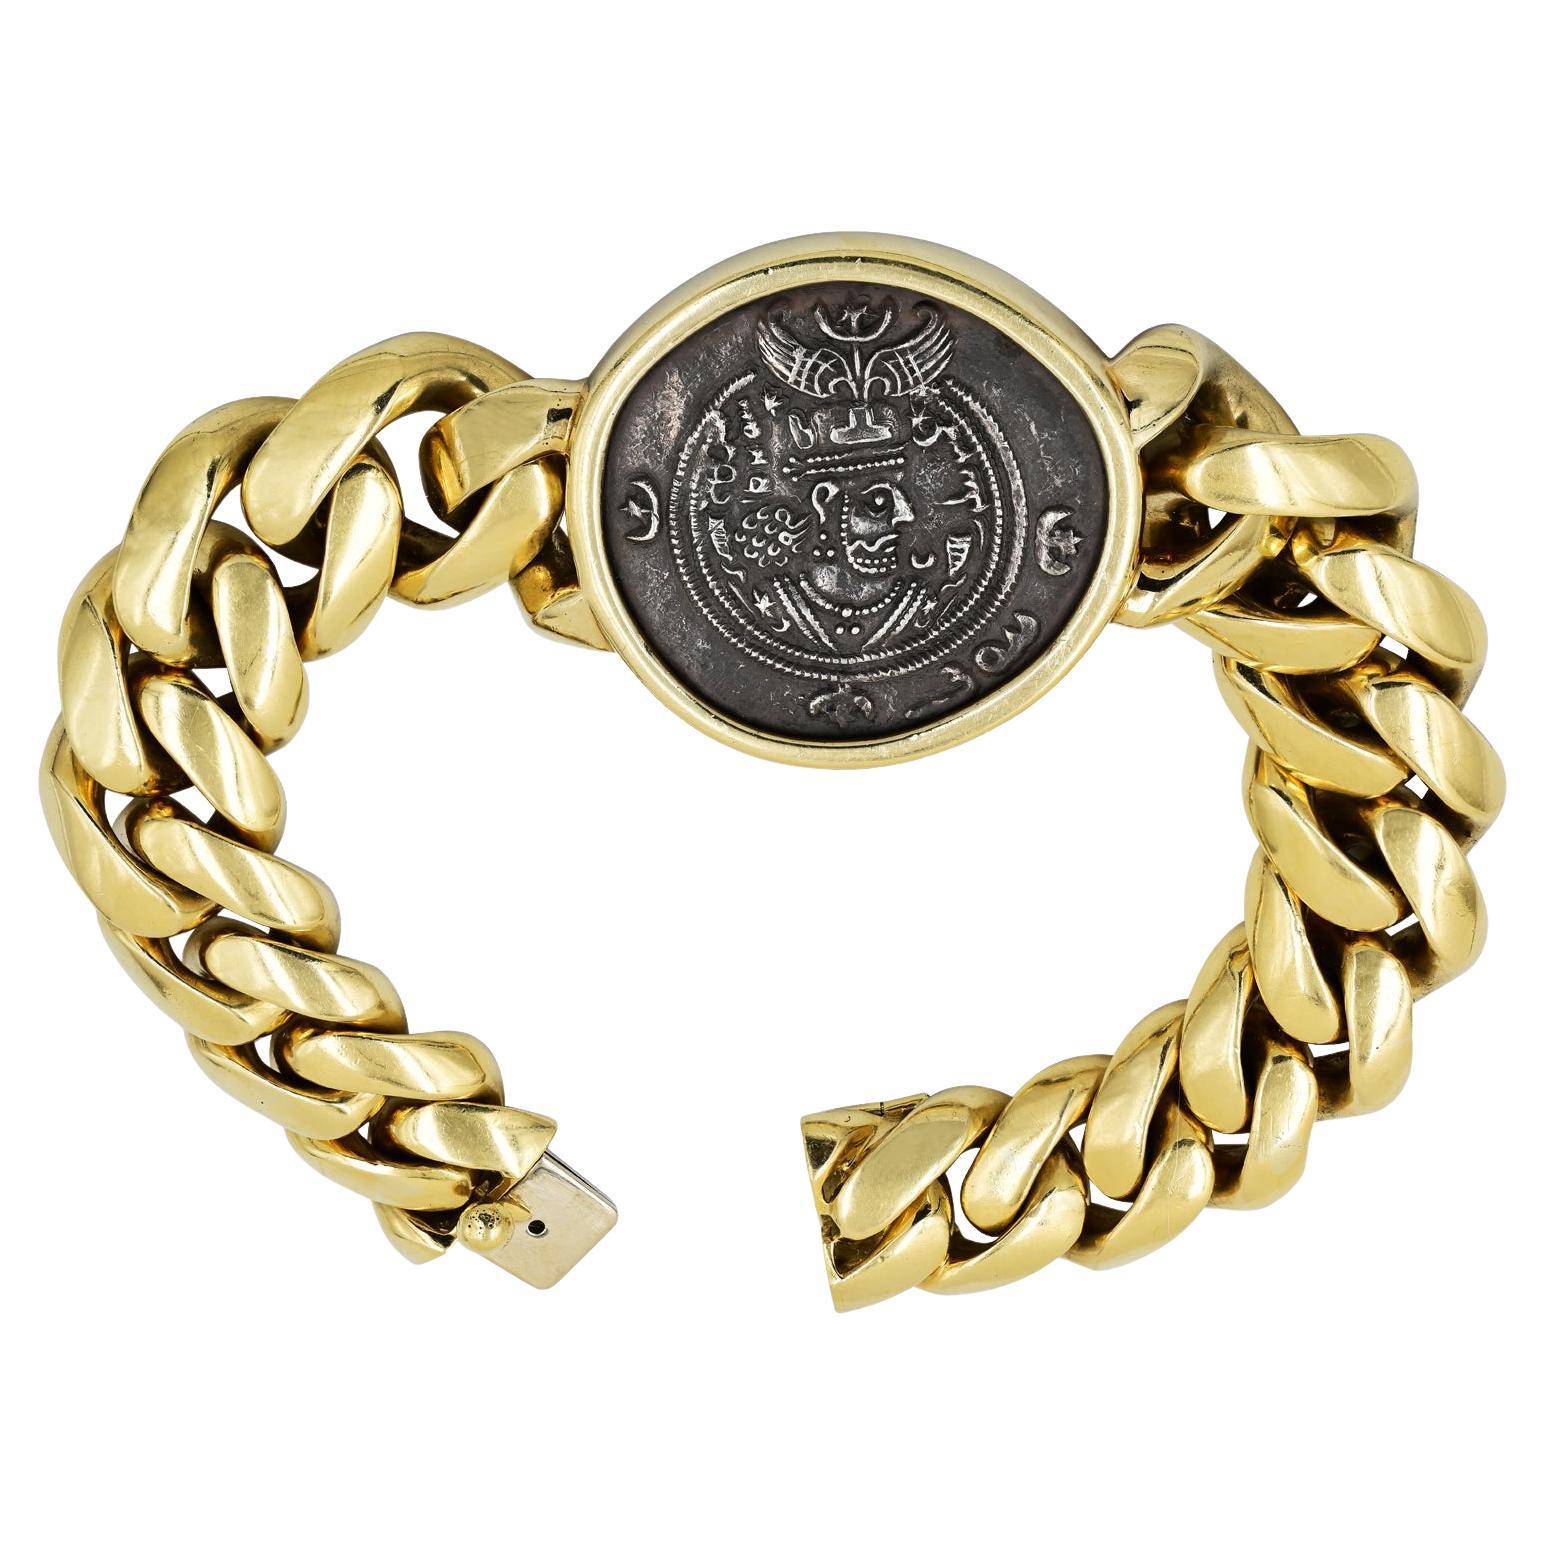 Bulgari Monete Chain Bracelet